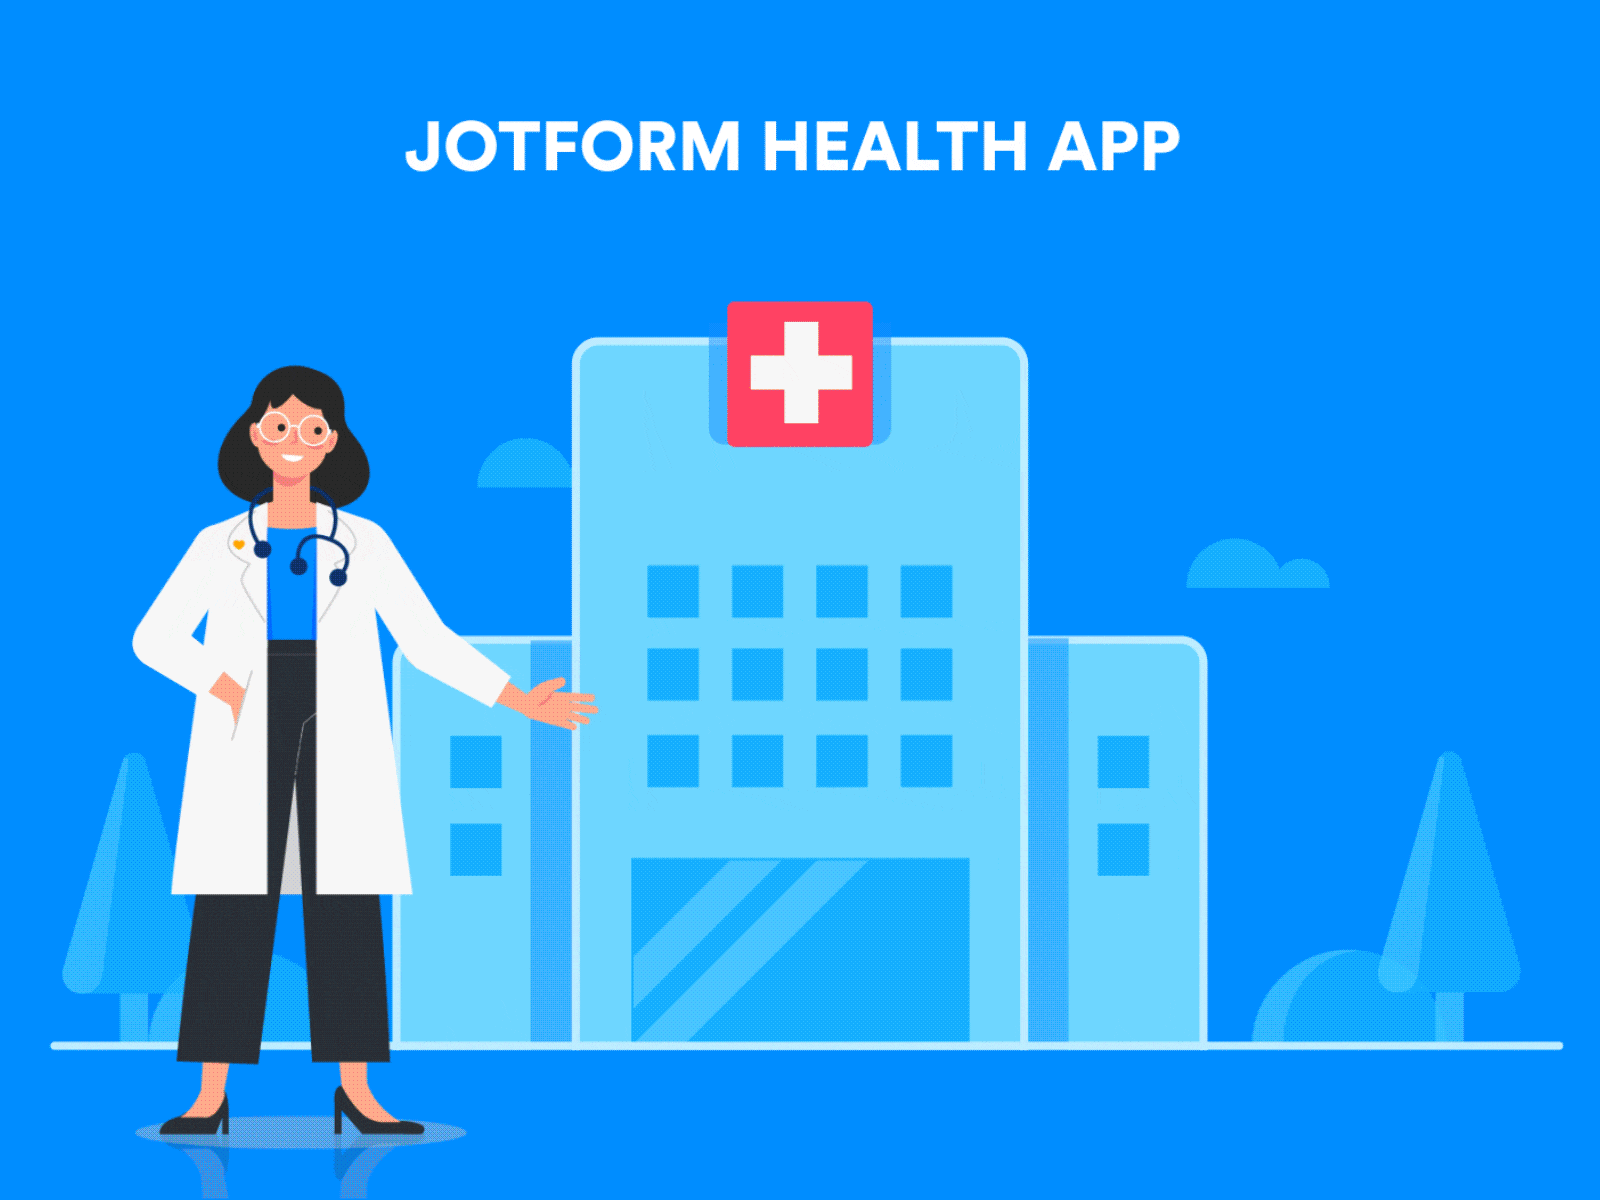 JotForm Health App health health app health service hipaa compliant hospital jotform kiosk mobile app qr qr code touchless kiosk transform